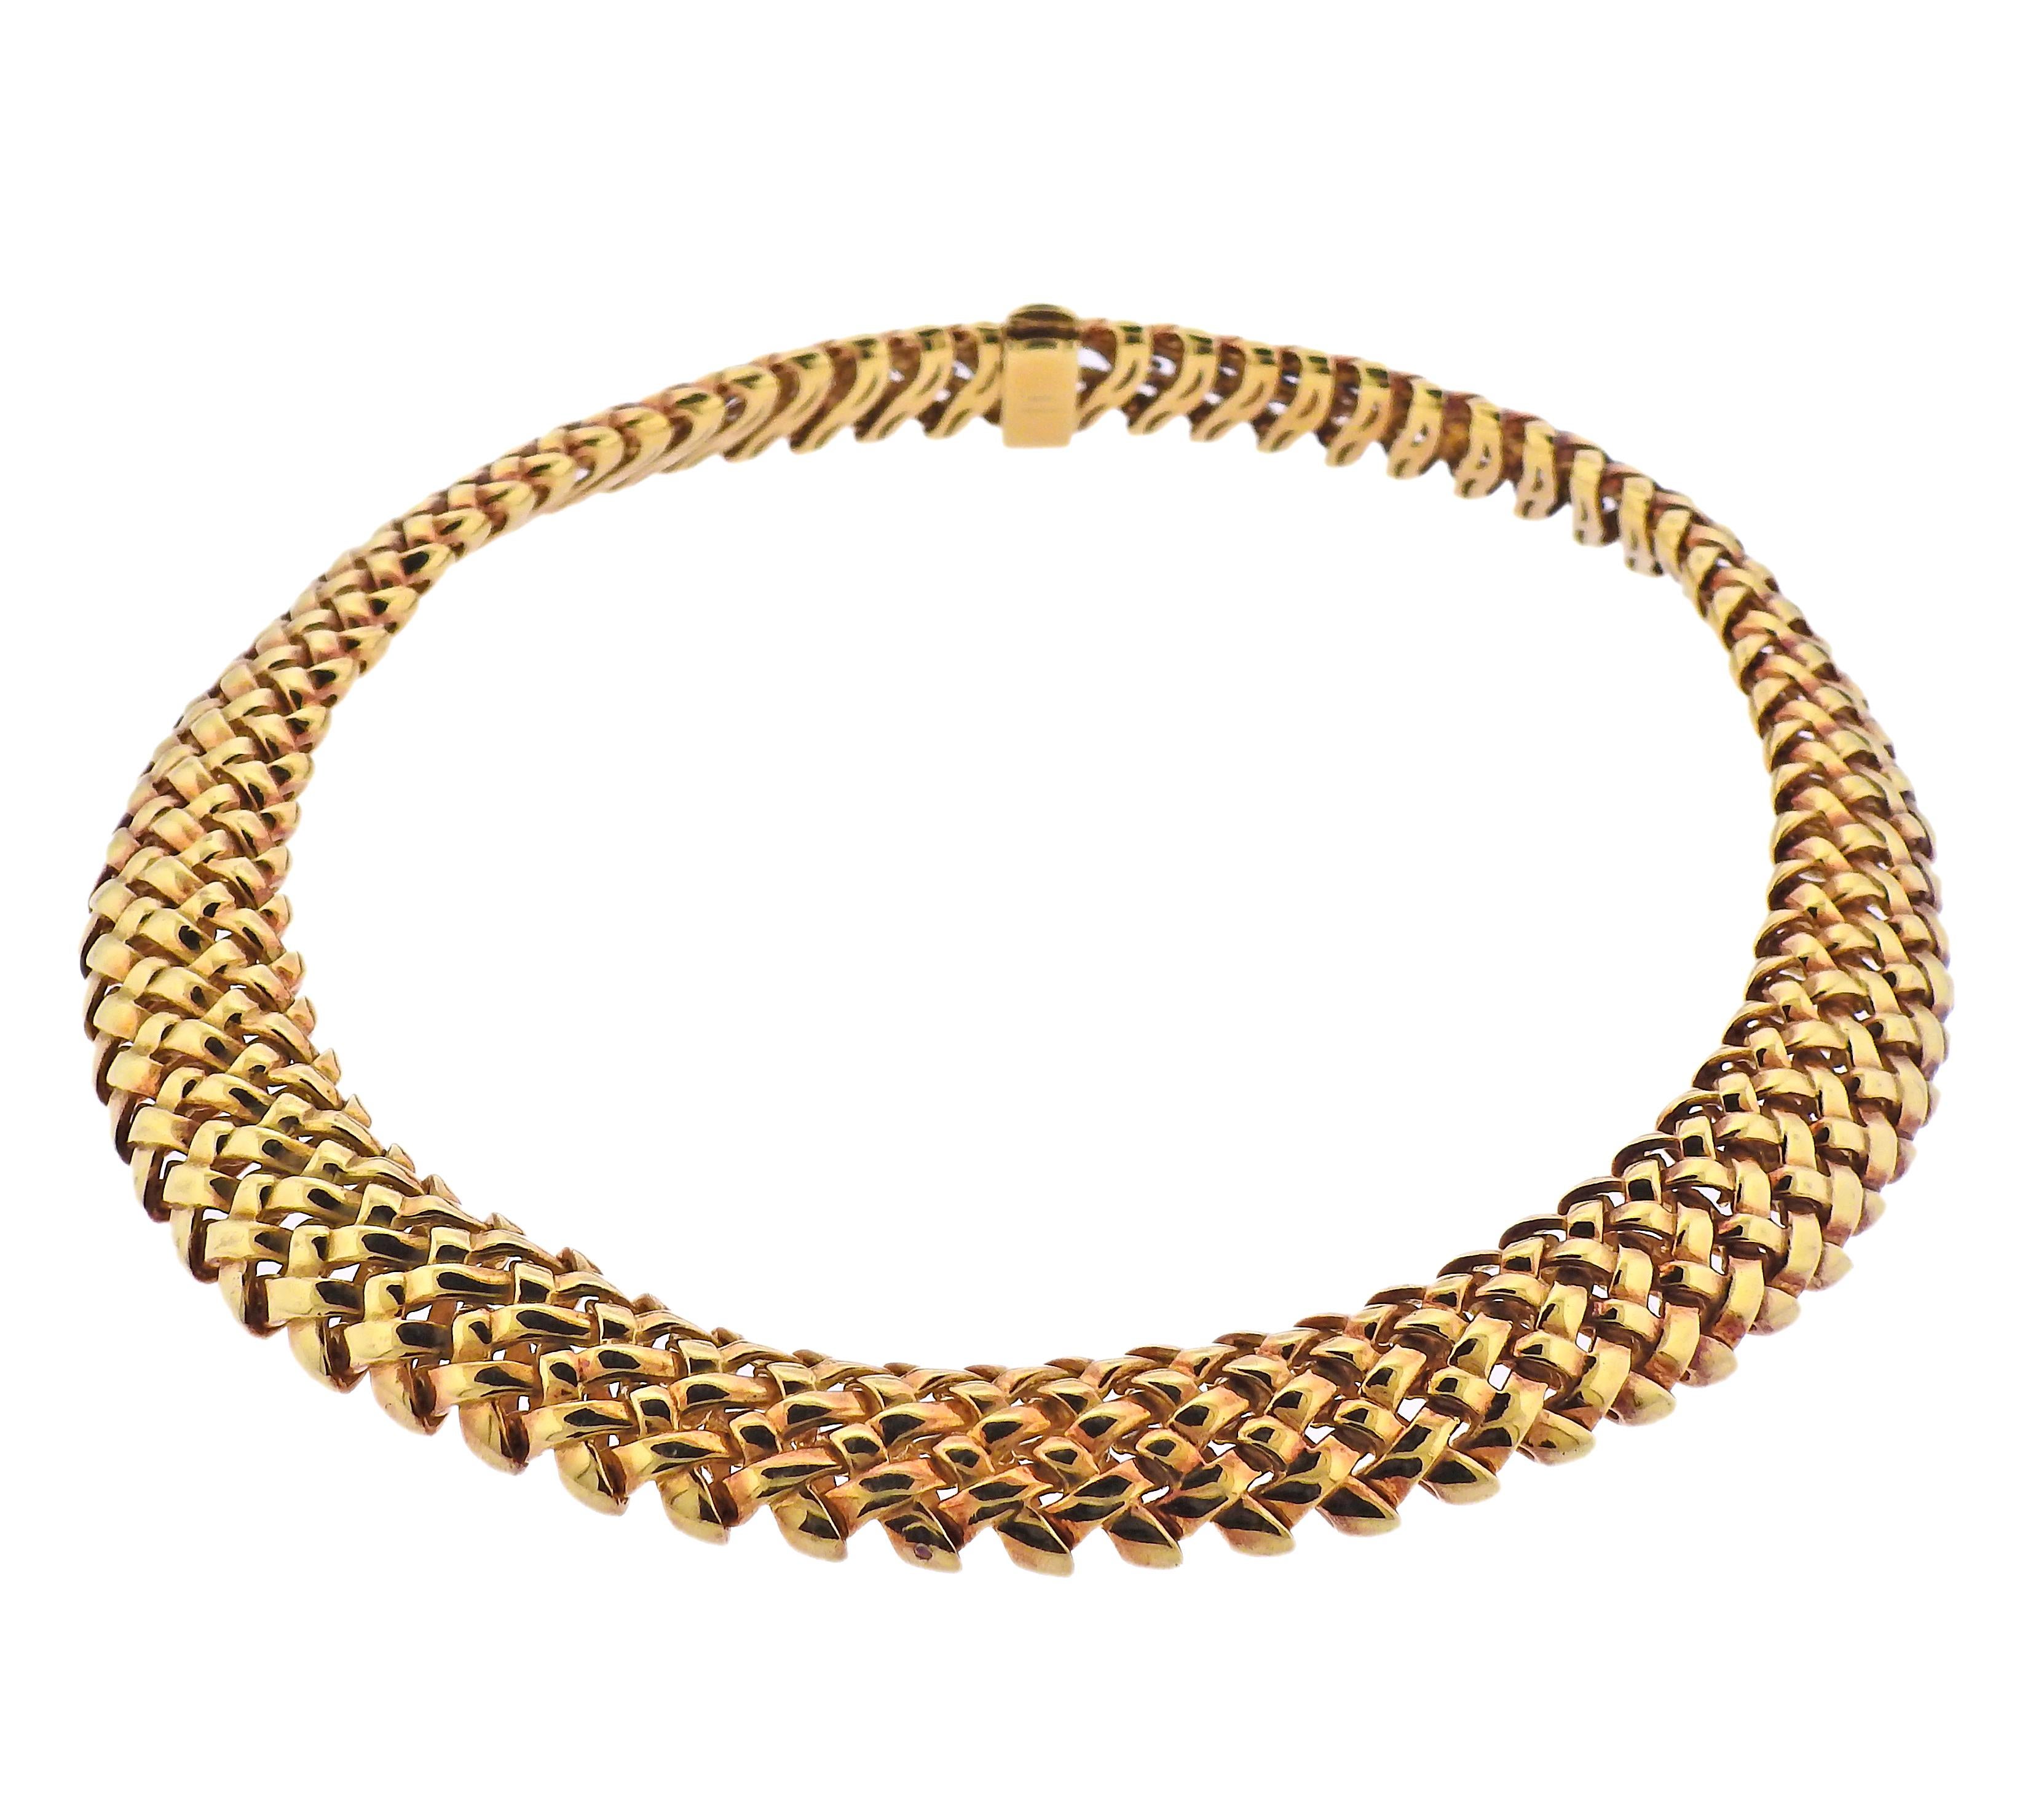 Tiffany & Co circa 1960s 18k gold woven design necklace. Measuring approx. 15.5